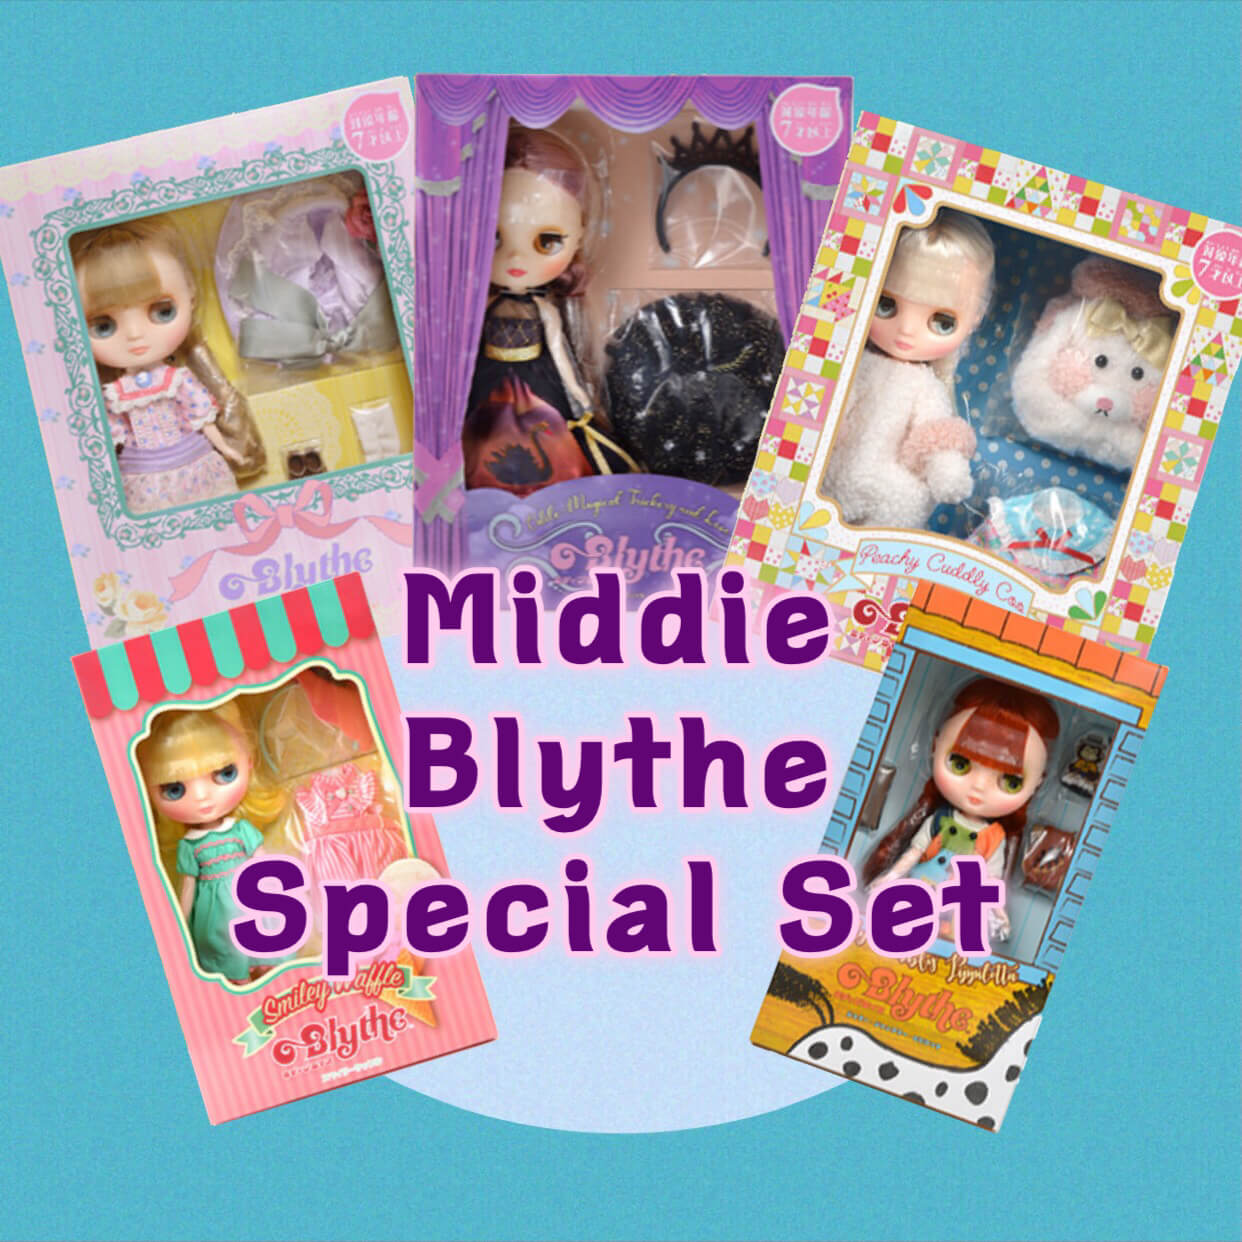 Spring Break Special Event: Junie Moon Middie Blythe Special Set